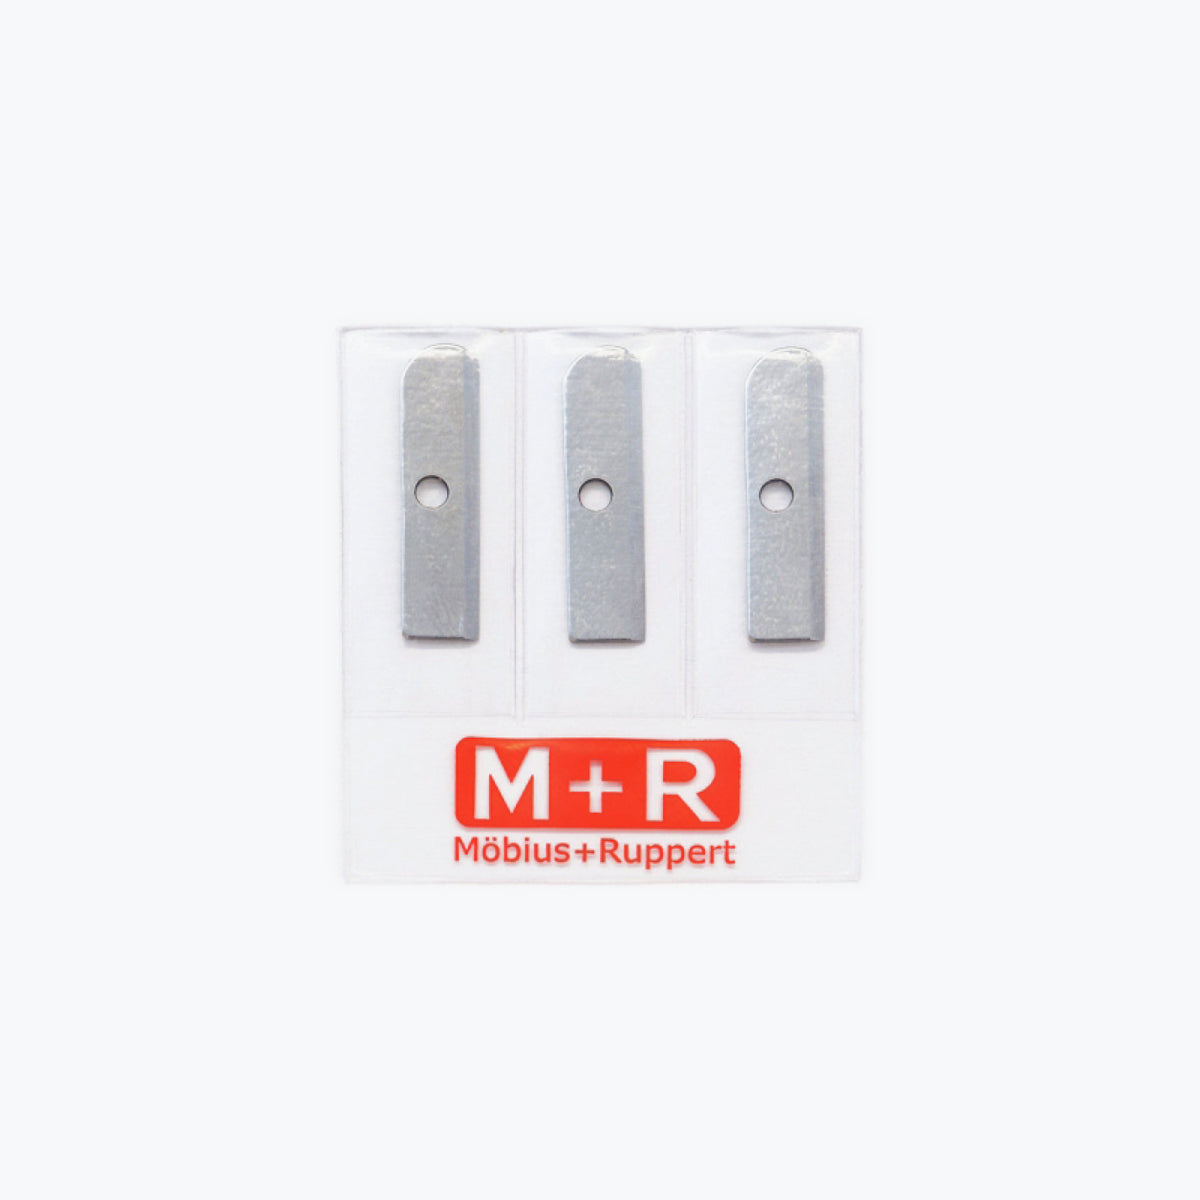 M+R - Replacement Blades - 0080 (Discos, Logos, Vertex and Minofix)